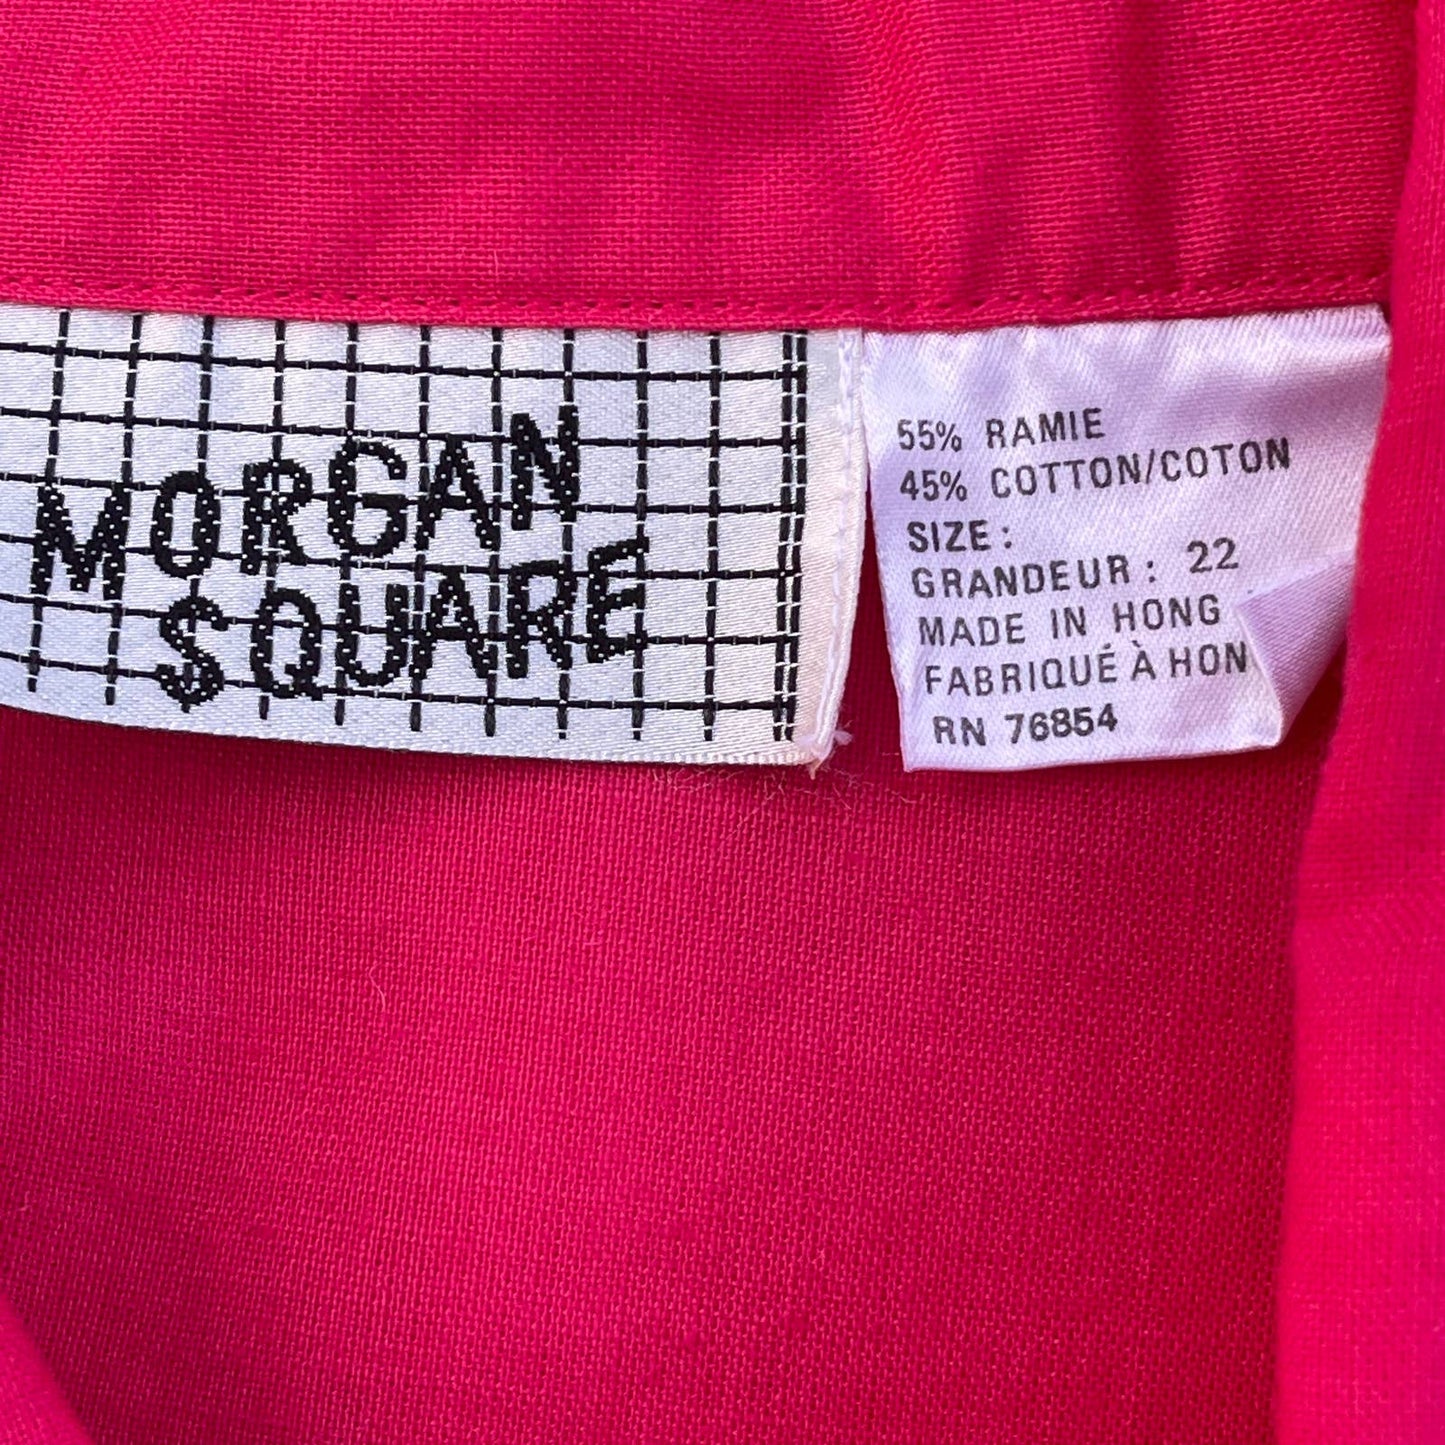 Vintage 90s Hot Pink Boxy Blouse Cotton Blend Button Up Morgan Square Size 22